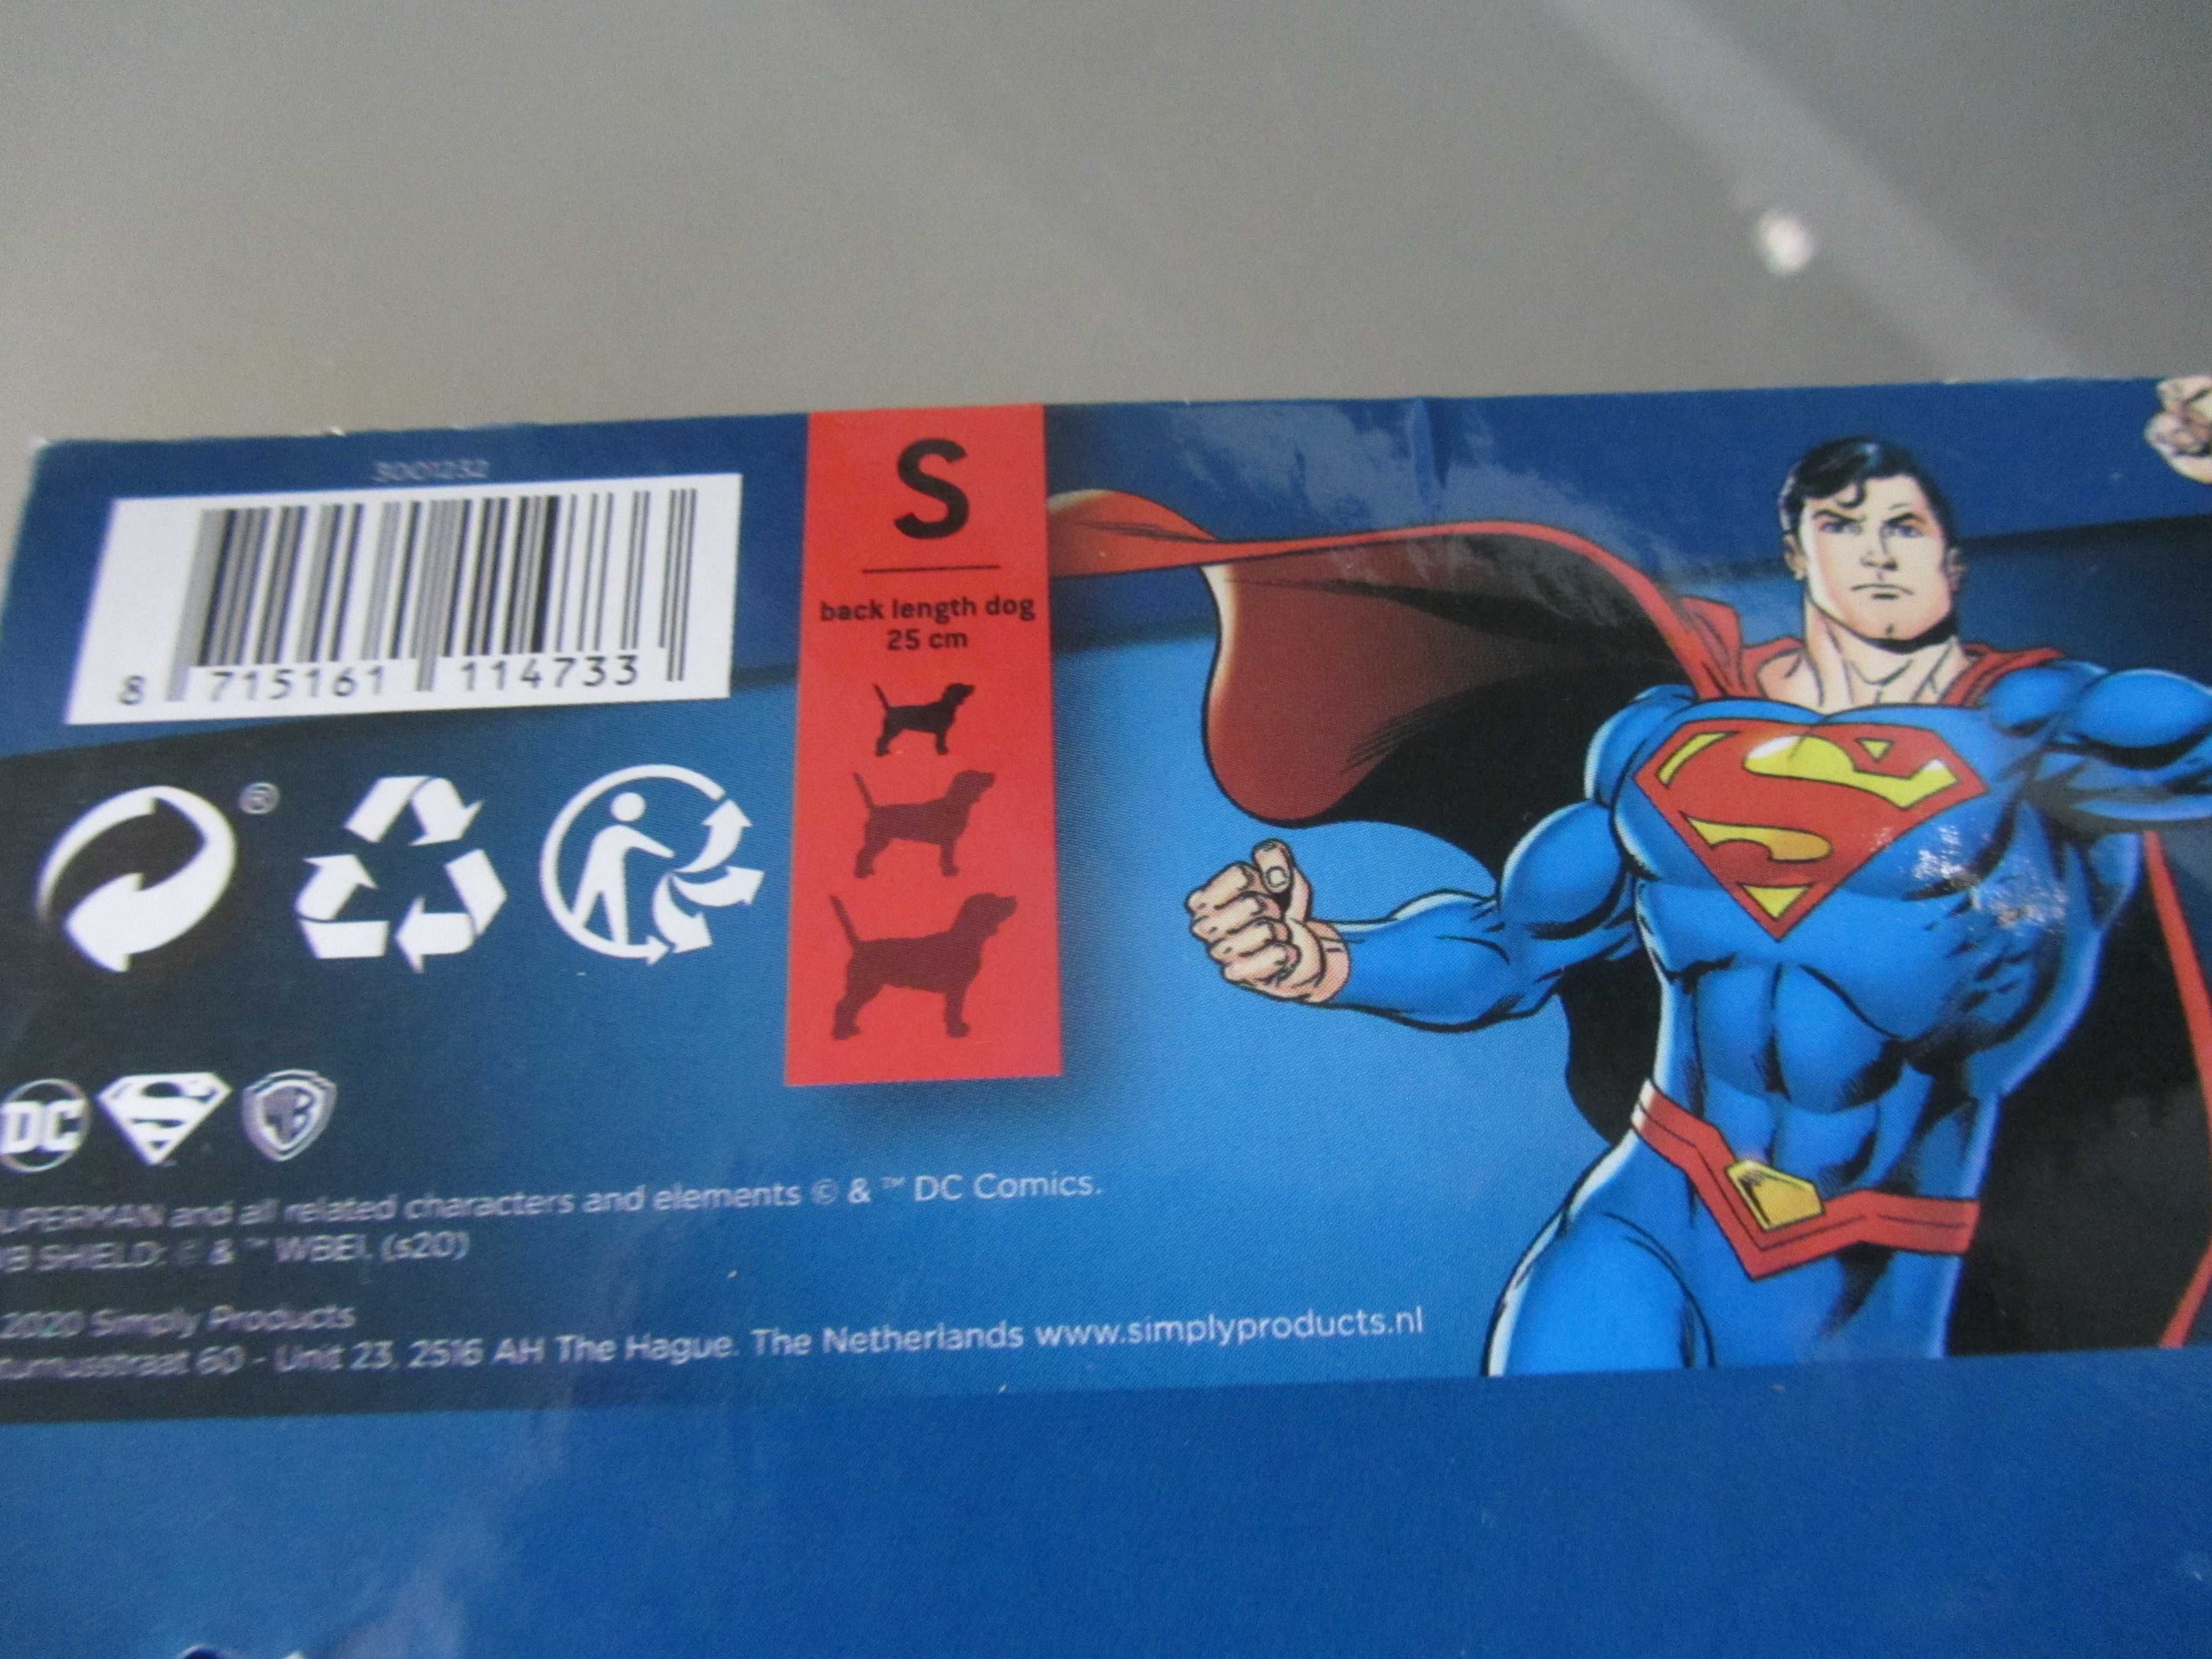 kostium ubranko strój Supermana/Batmana dla psa/kota rozm. S na 25 cm